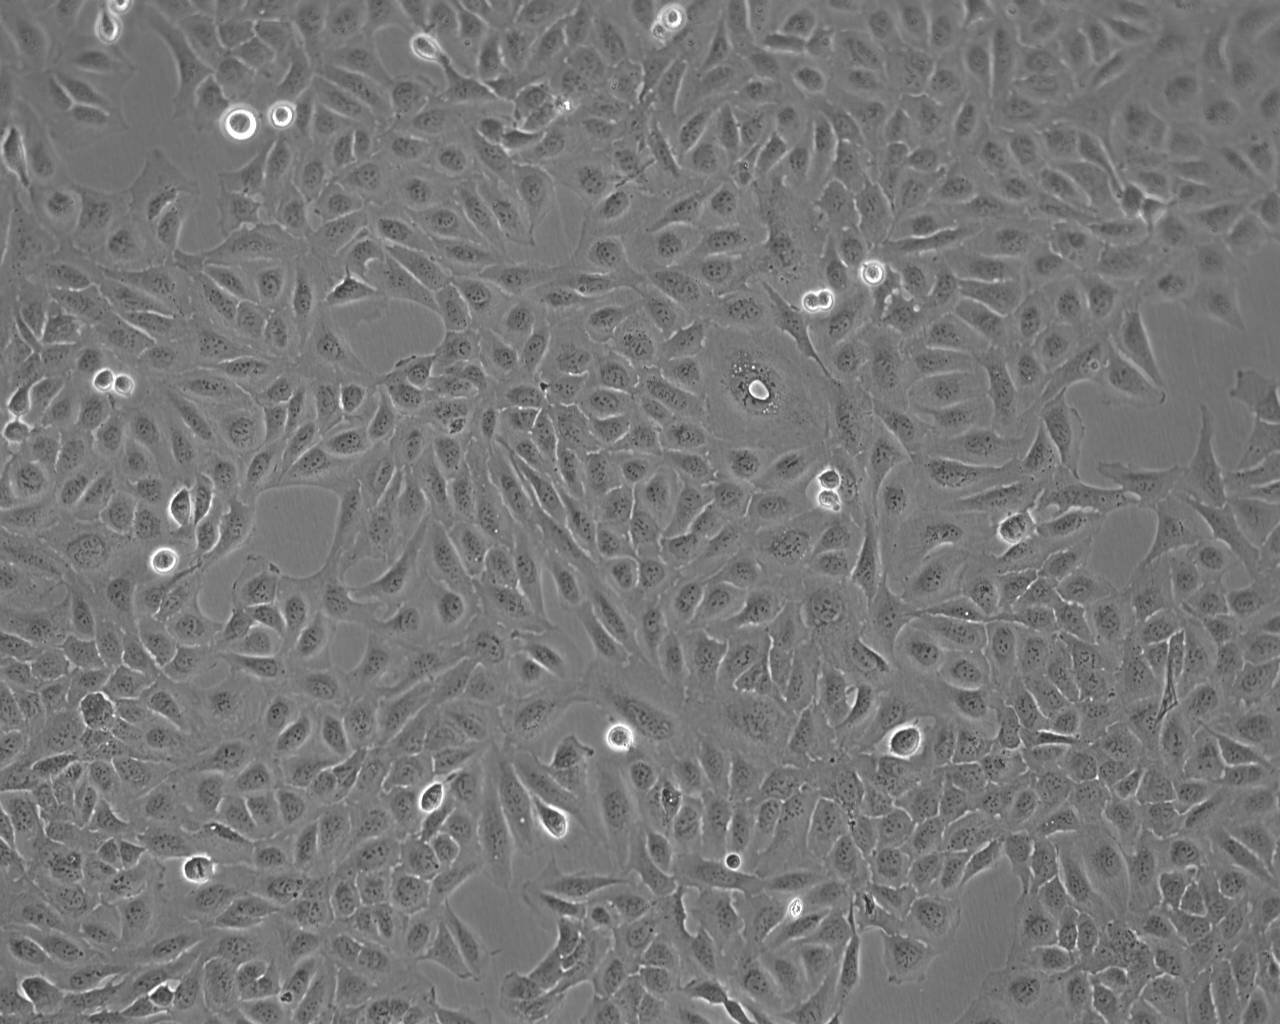 RLE-6TN Adherent大鼠肺泡Ⅱ型细胞系,RLE-6TN Adherent